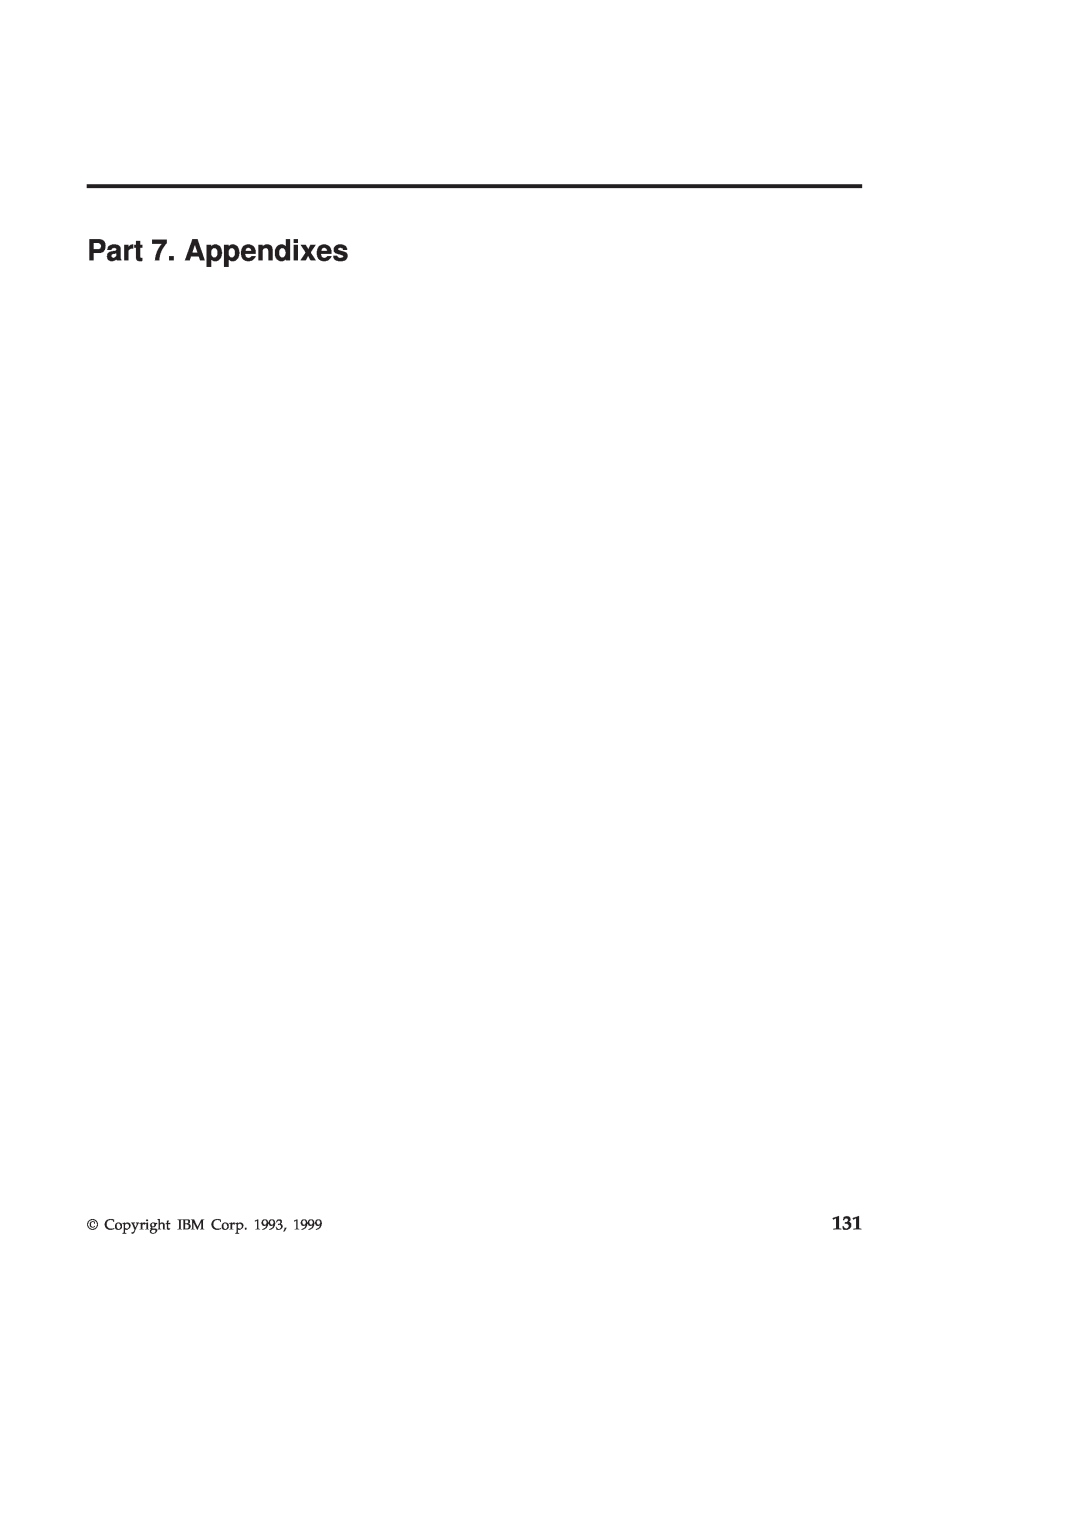 IBM GC09-2830-00 manual Part 7. Appendixes, Copyright IBM Corp. 1993 